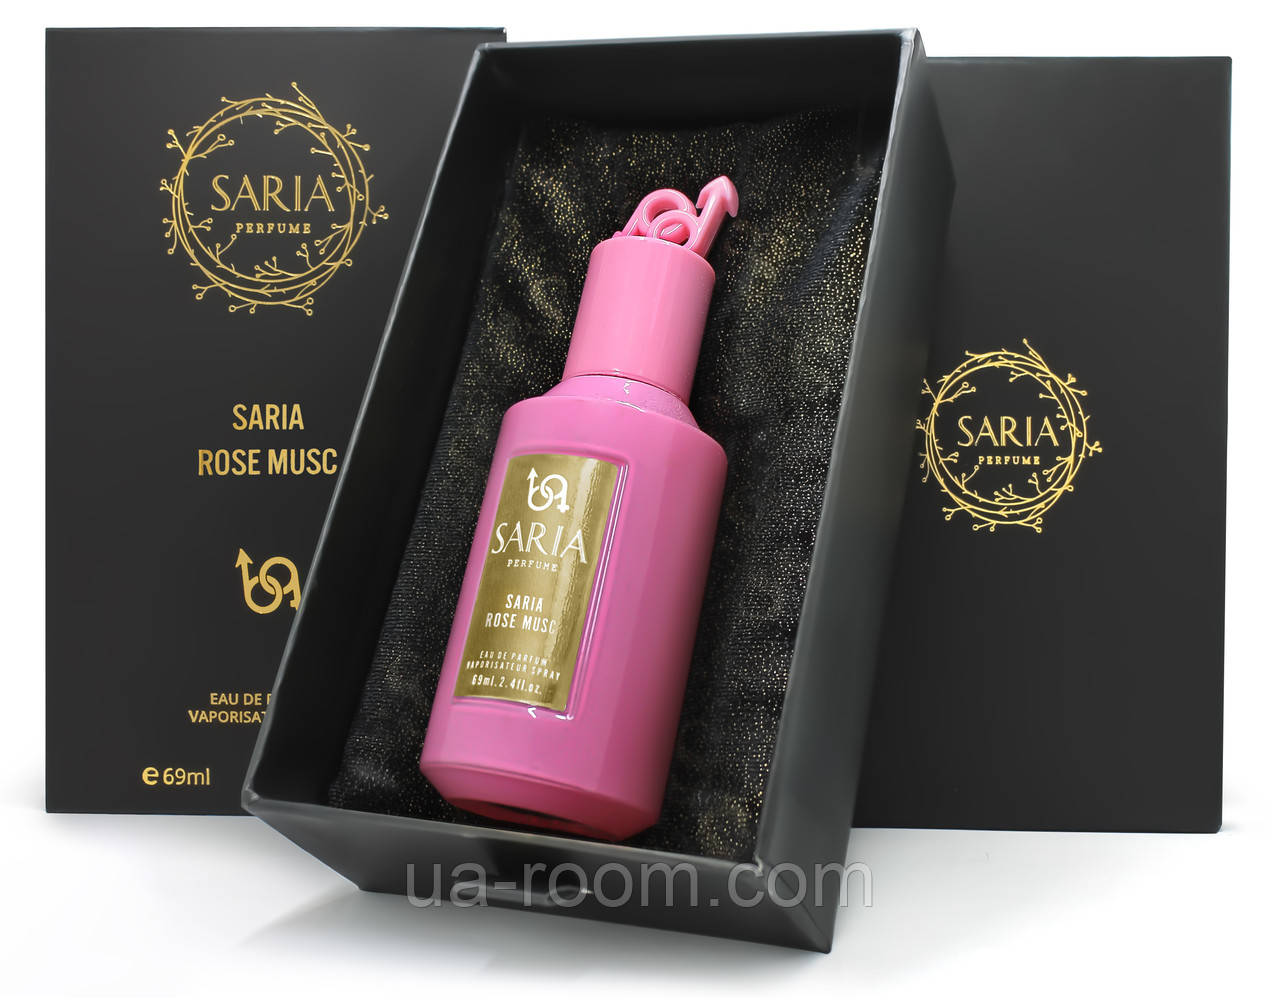 Saria Saria Rose Musc, жіночі (Montale Roses Musk), 69 ml у подарунковому пакованні